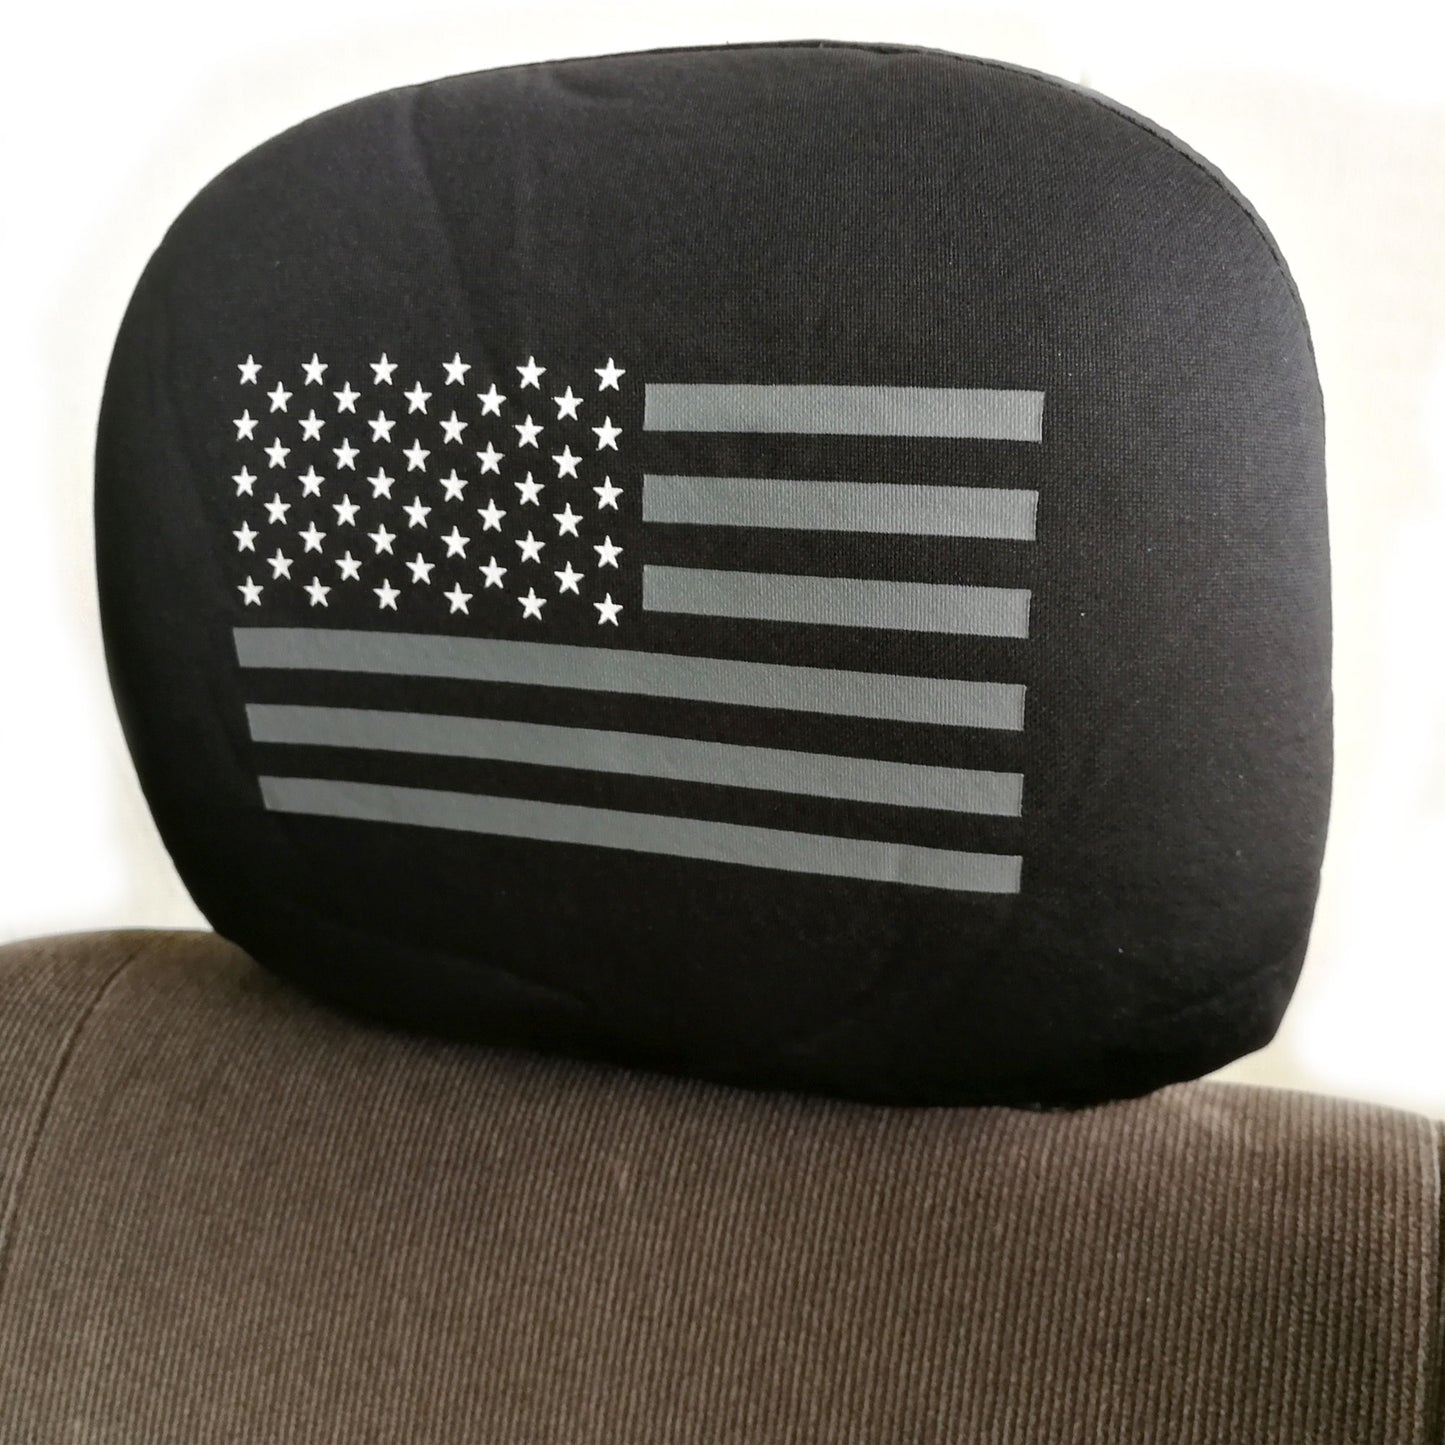 America Flag Design Auto Truck SUV Car Seat Headrest Cover  actual photo